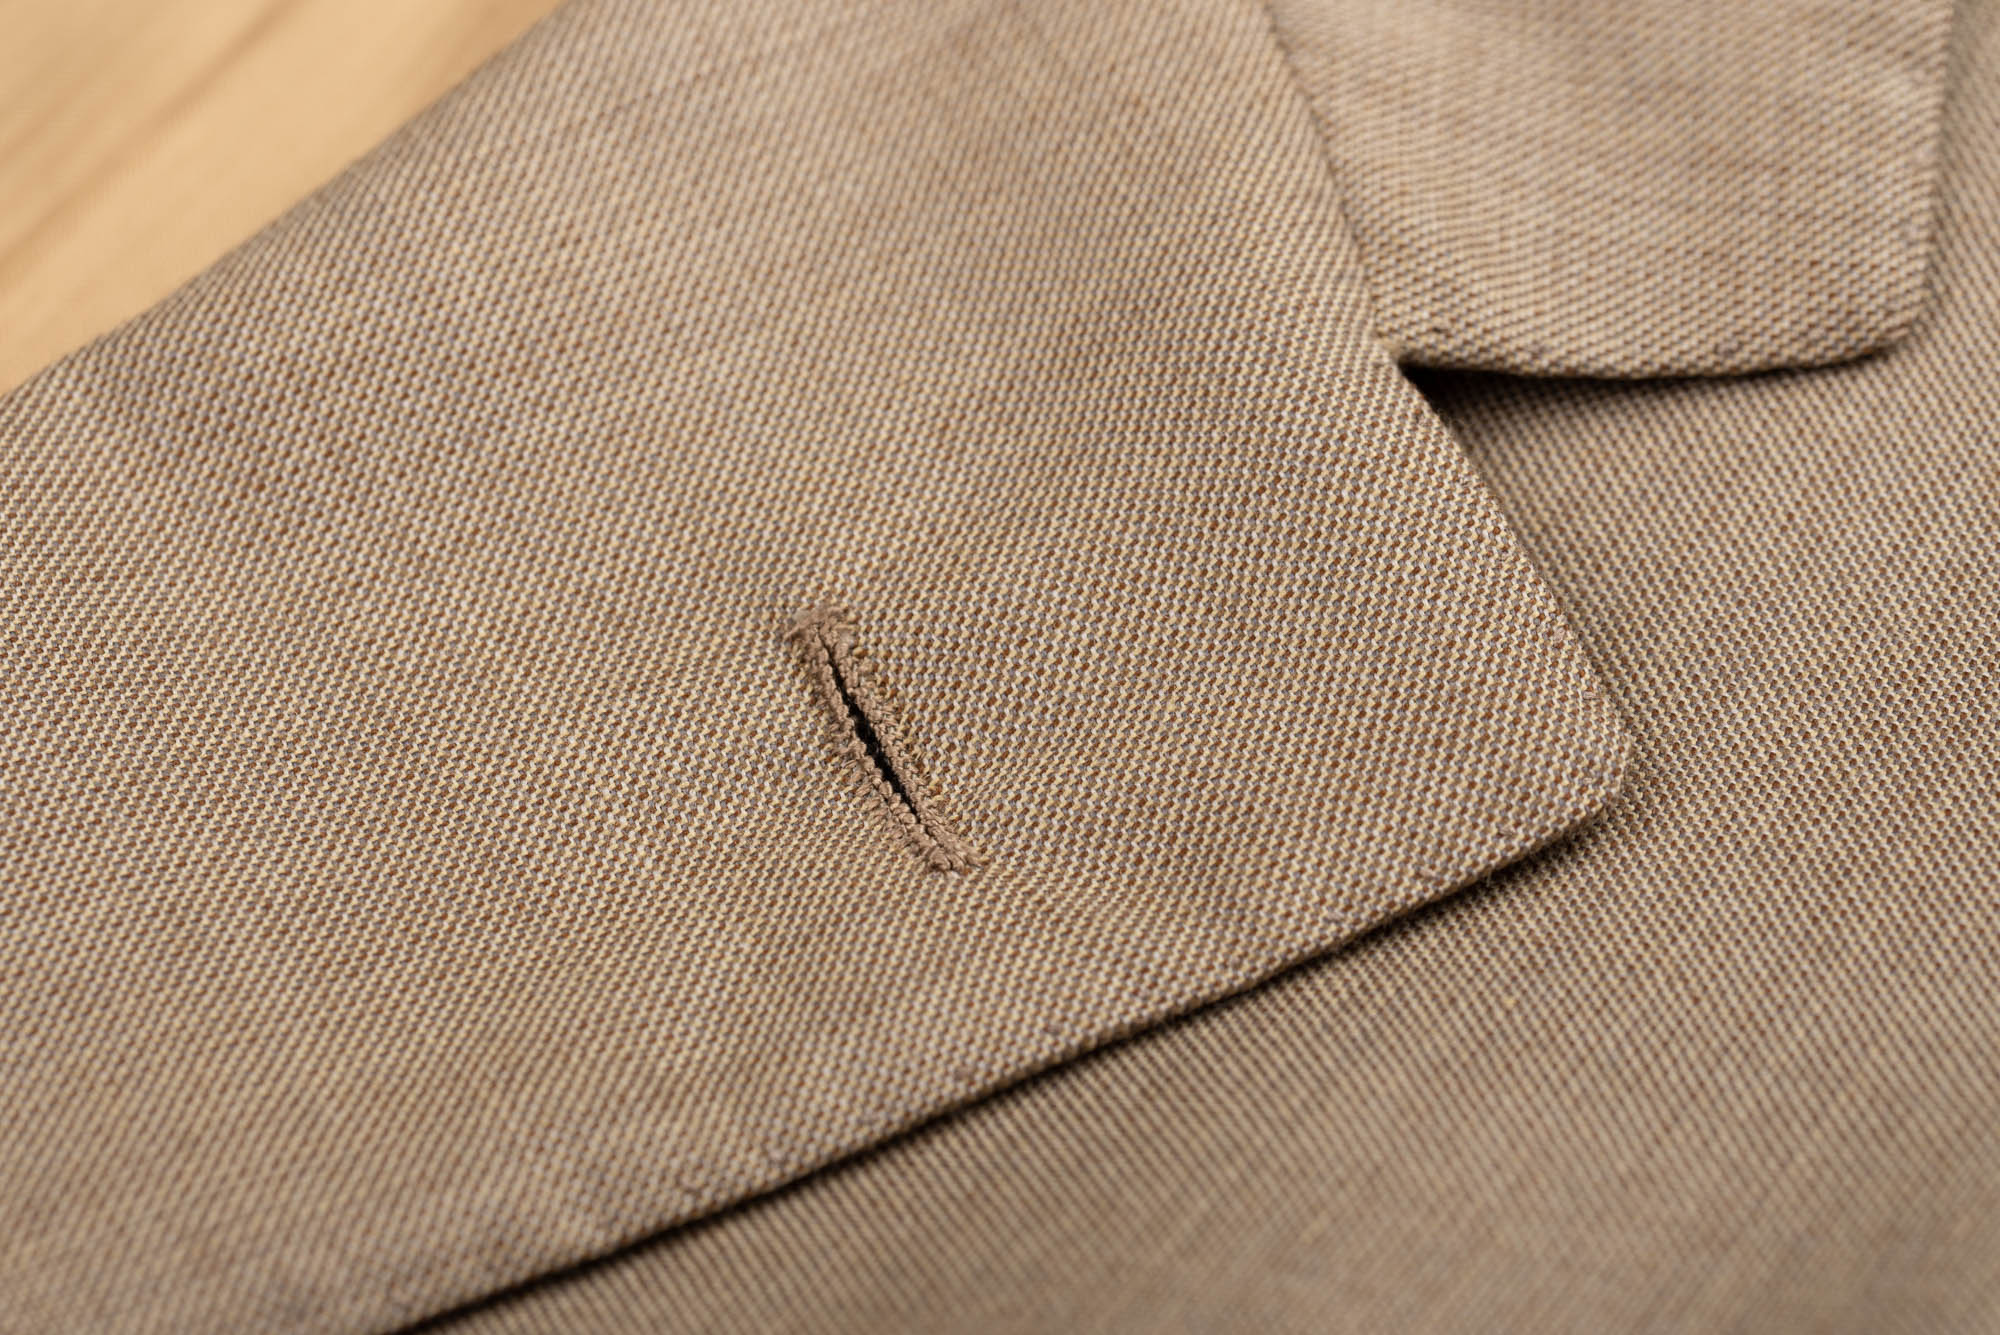 D'AVENZA Roma Handmade Beige Wool Suit EU 50 NEW US 40 Long D'AVENZA